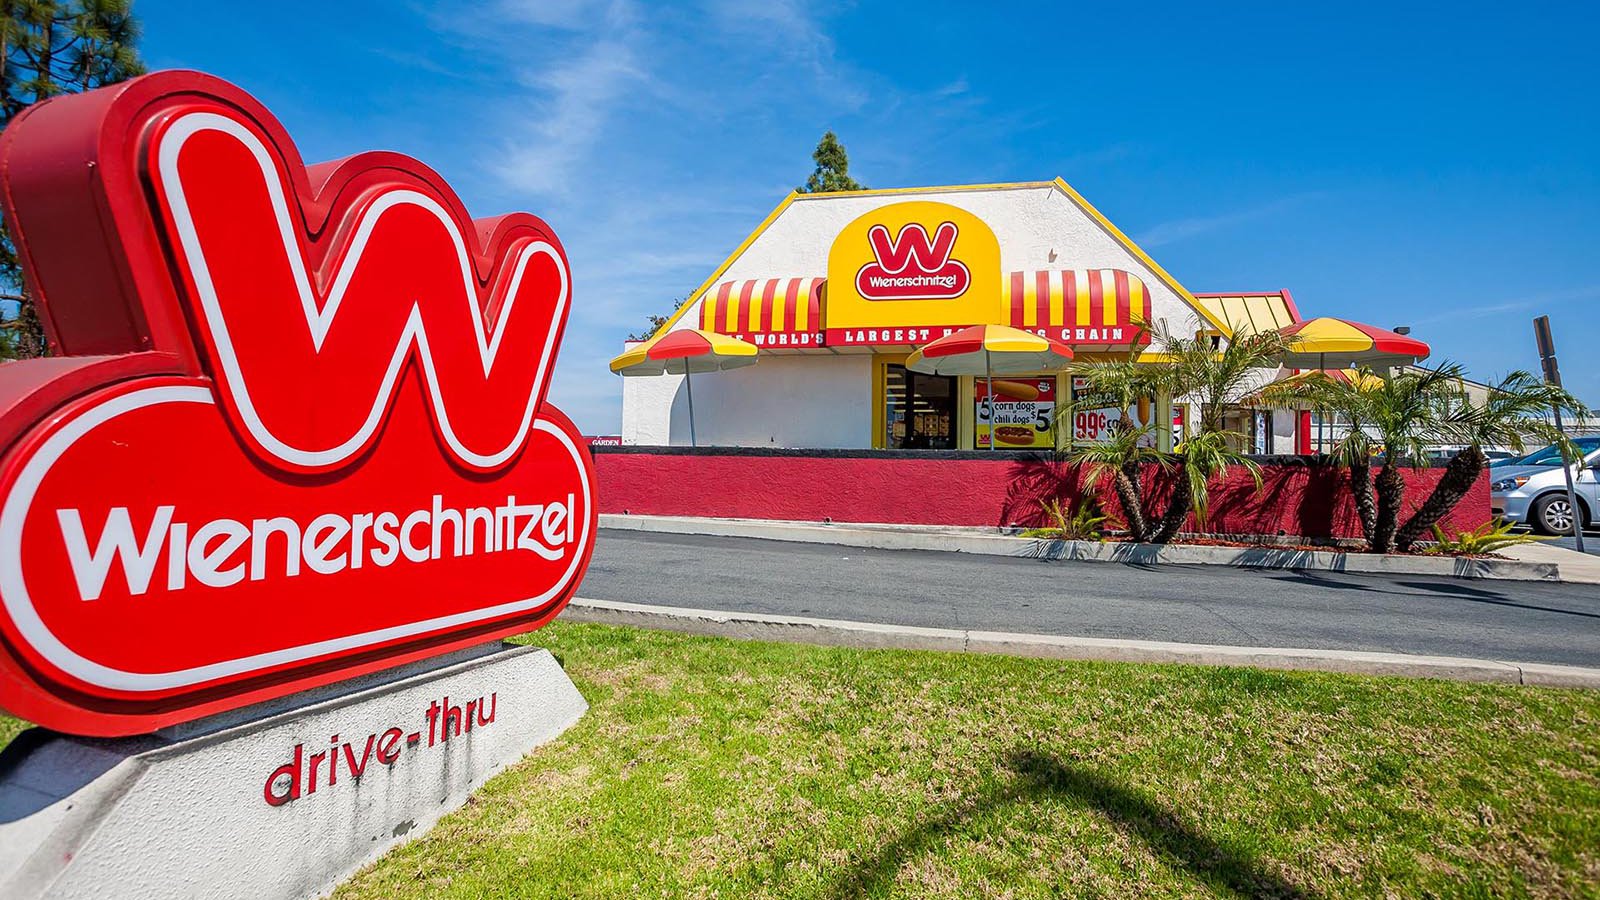 Exterior architectural image of a Wienerschnitzel restaurant in Costa Mesa, California